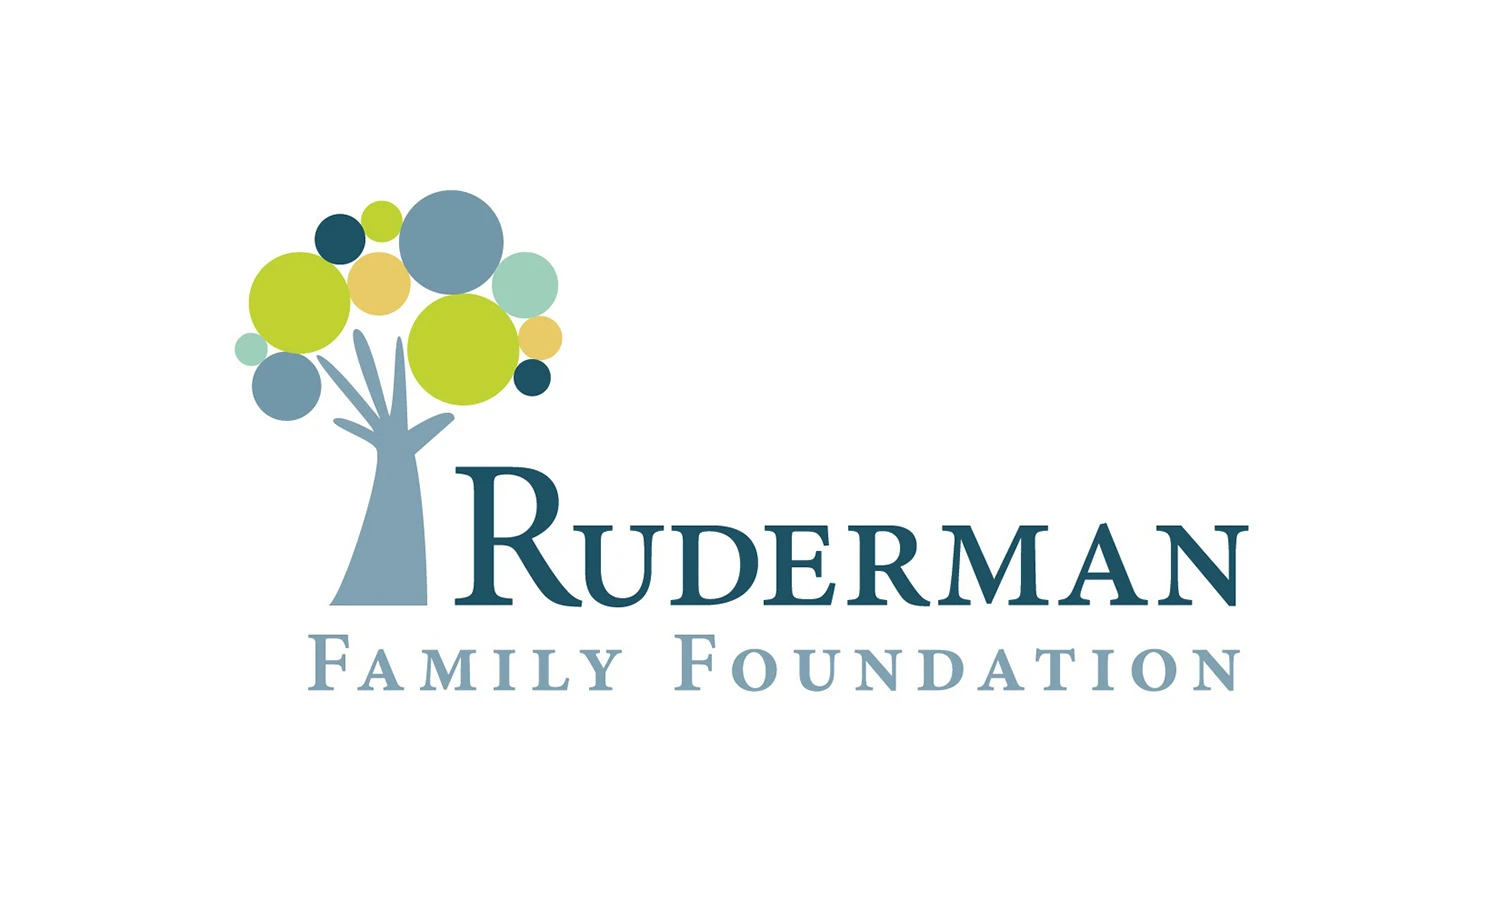 Ruderman Family Foundation logo used for sponsorship recognition on museum programs. 